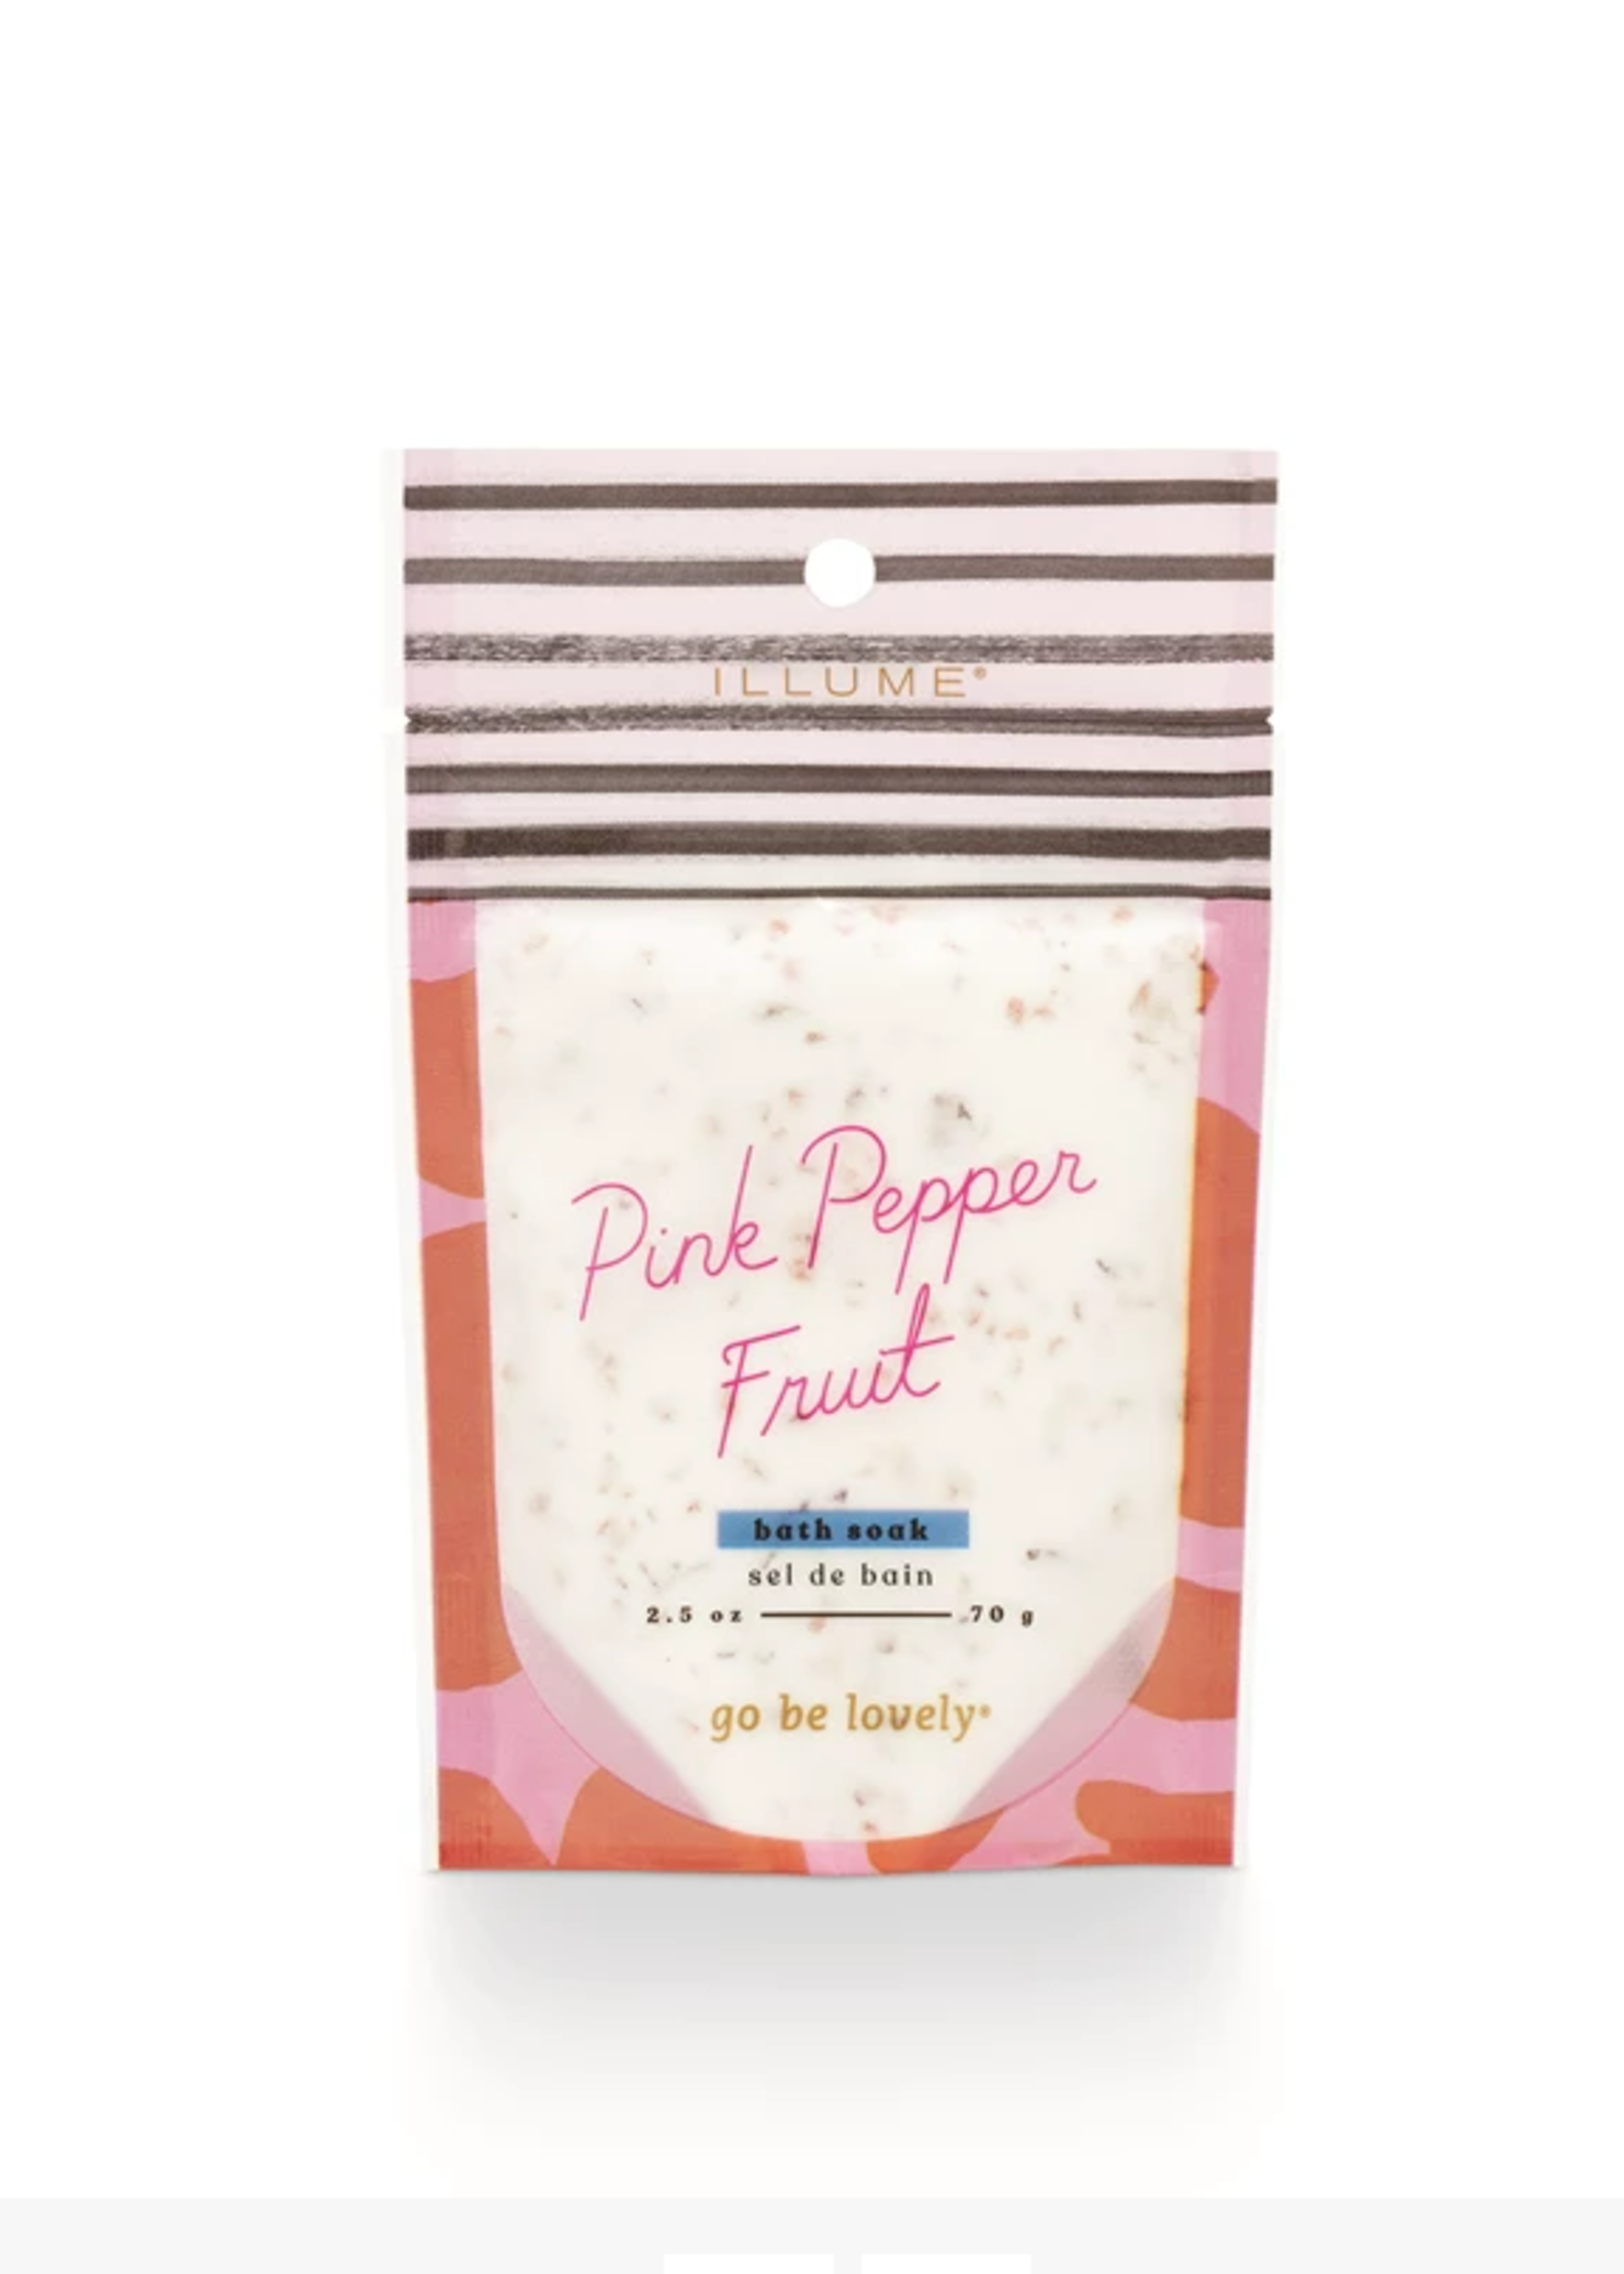 Pink Pepper Fruit Bath Soak (2.5 oz)